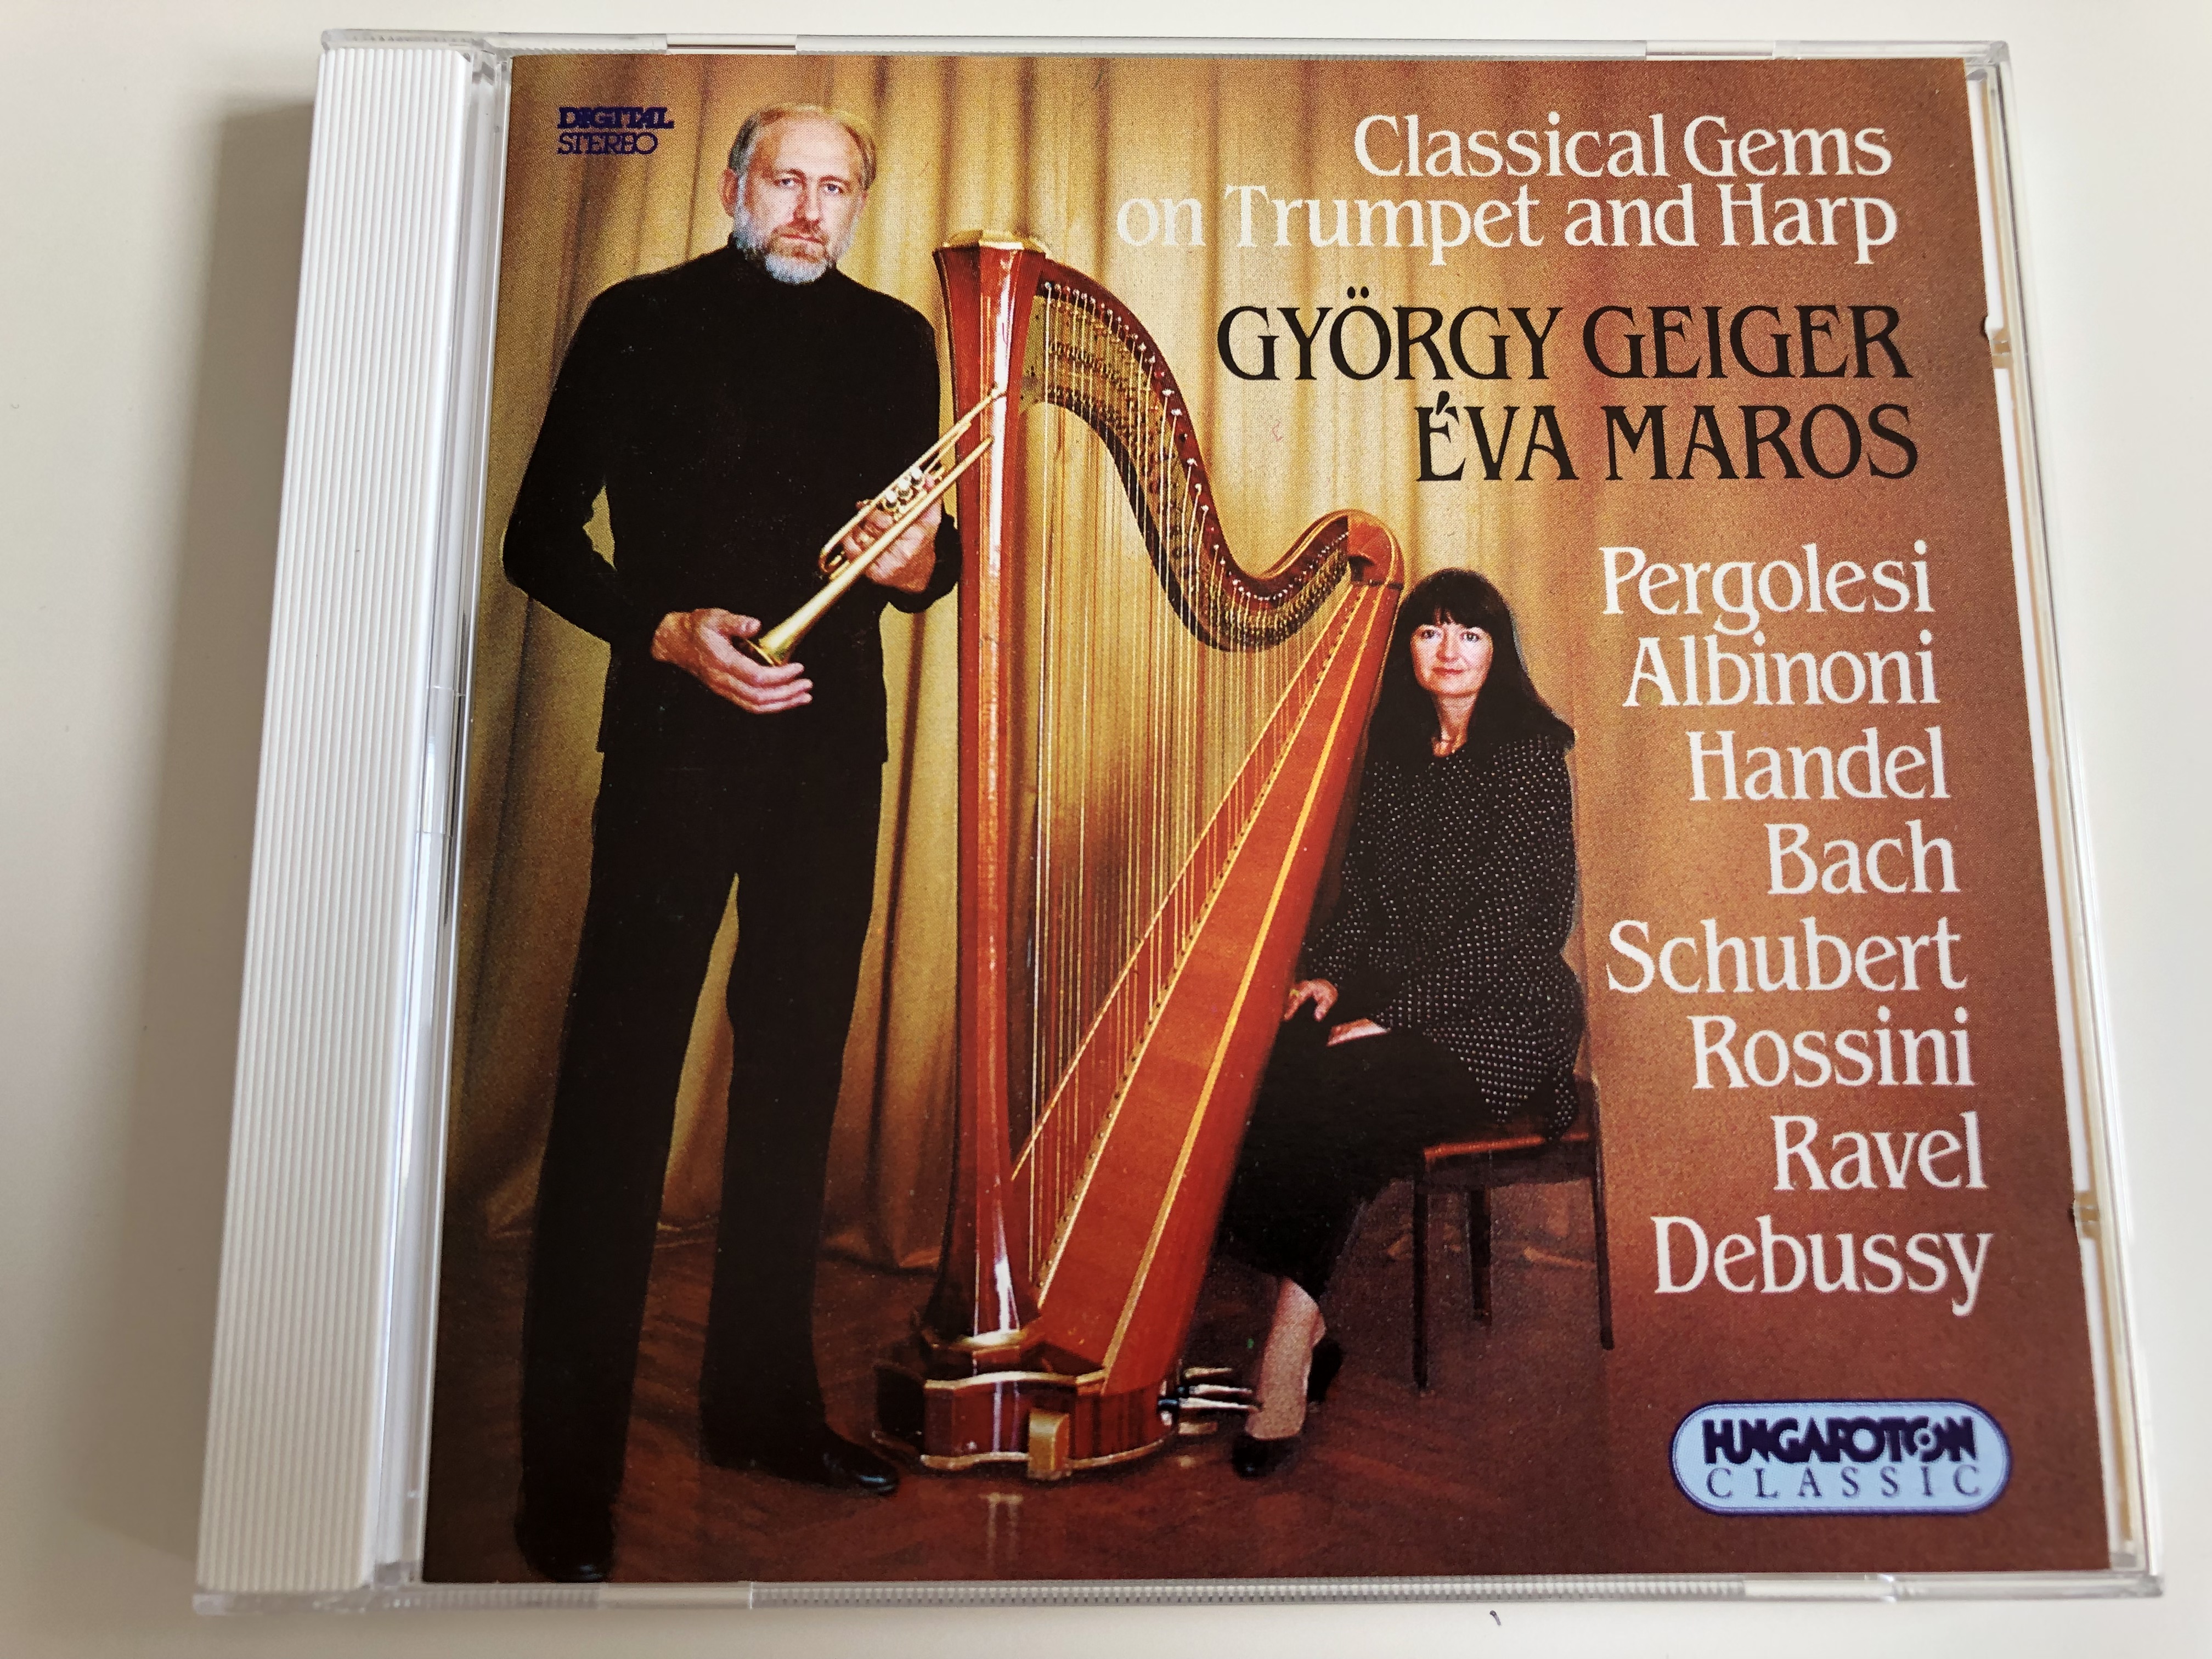 classical-gems-on-trumpet-and-harp-gy-rgy-geiger-va-maros-pergolesi-albinoni-handel-bach-schubert-rossini-ravel-debussy-hungaroton-classic-hcd-31542-audio-cd-1994-1-.jpg